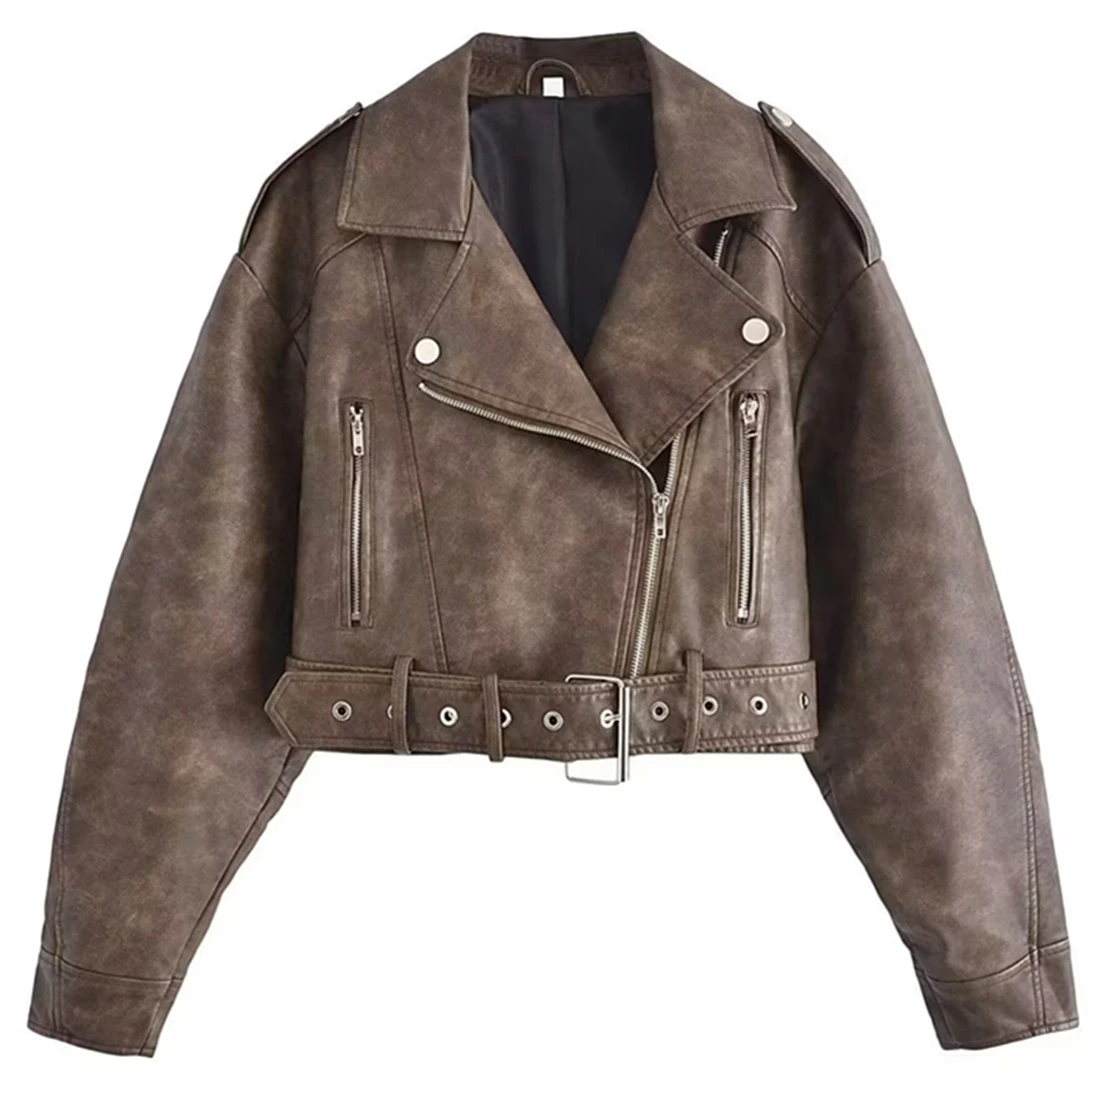 Withered Leather Jacket Loose Zippers Jacket Coat Vintage Washed